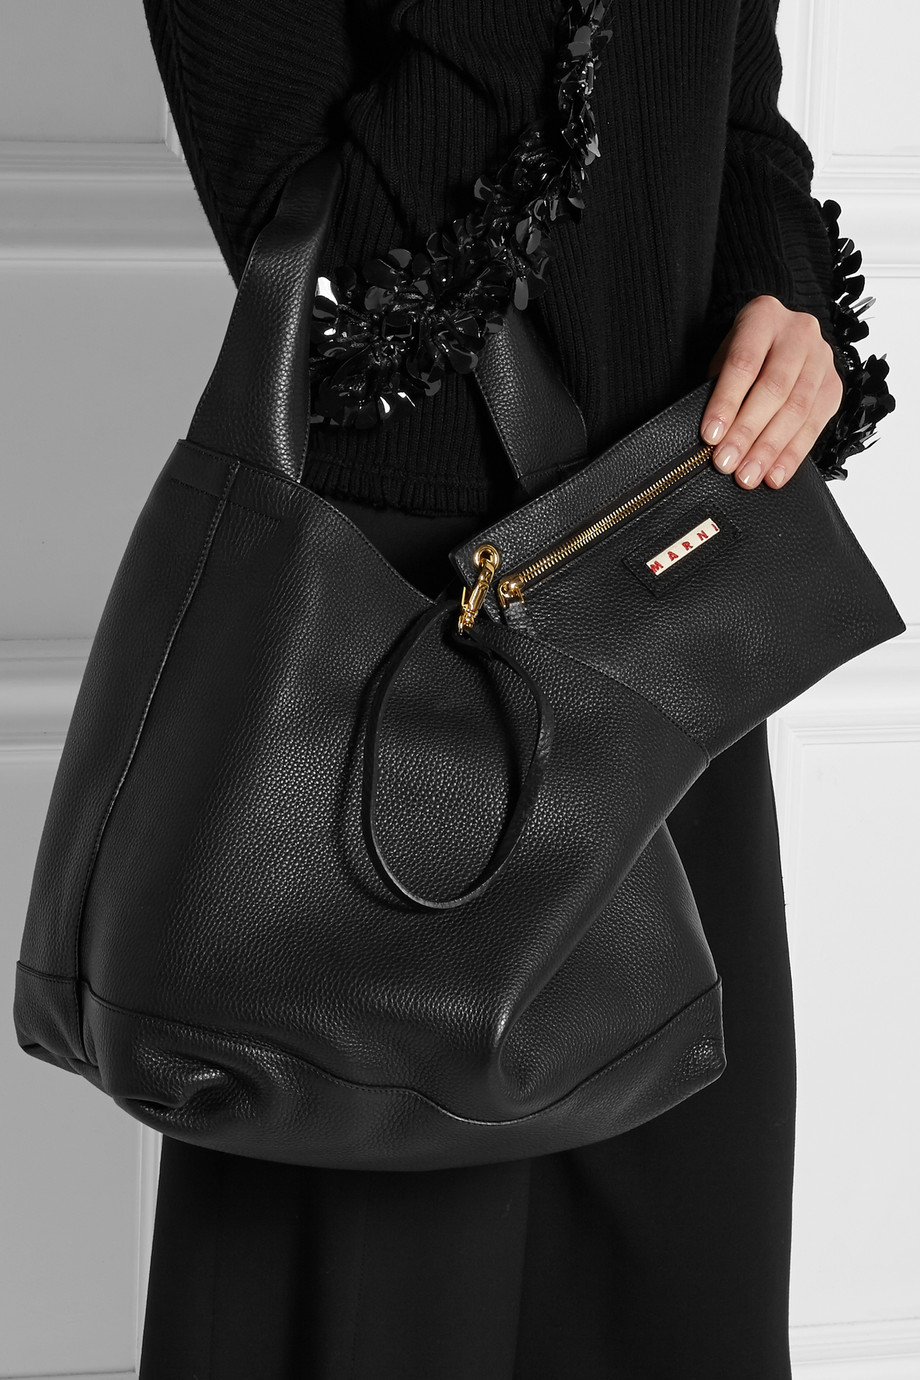 Marni Hobo Medium Textured-Leather Shoulder Bag in Black | Lyst